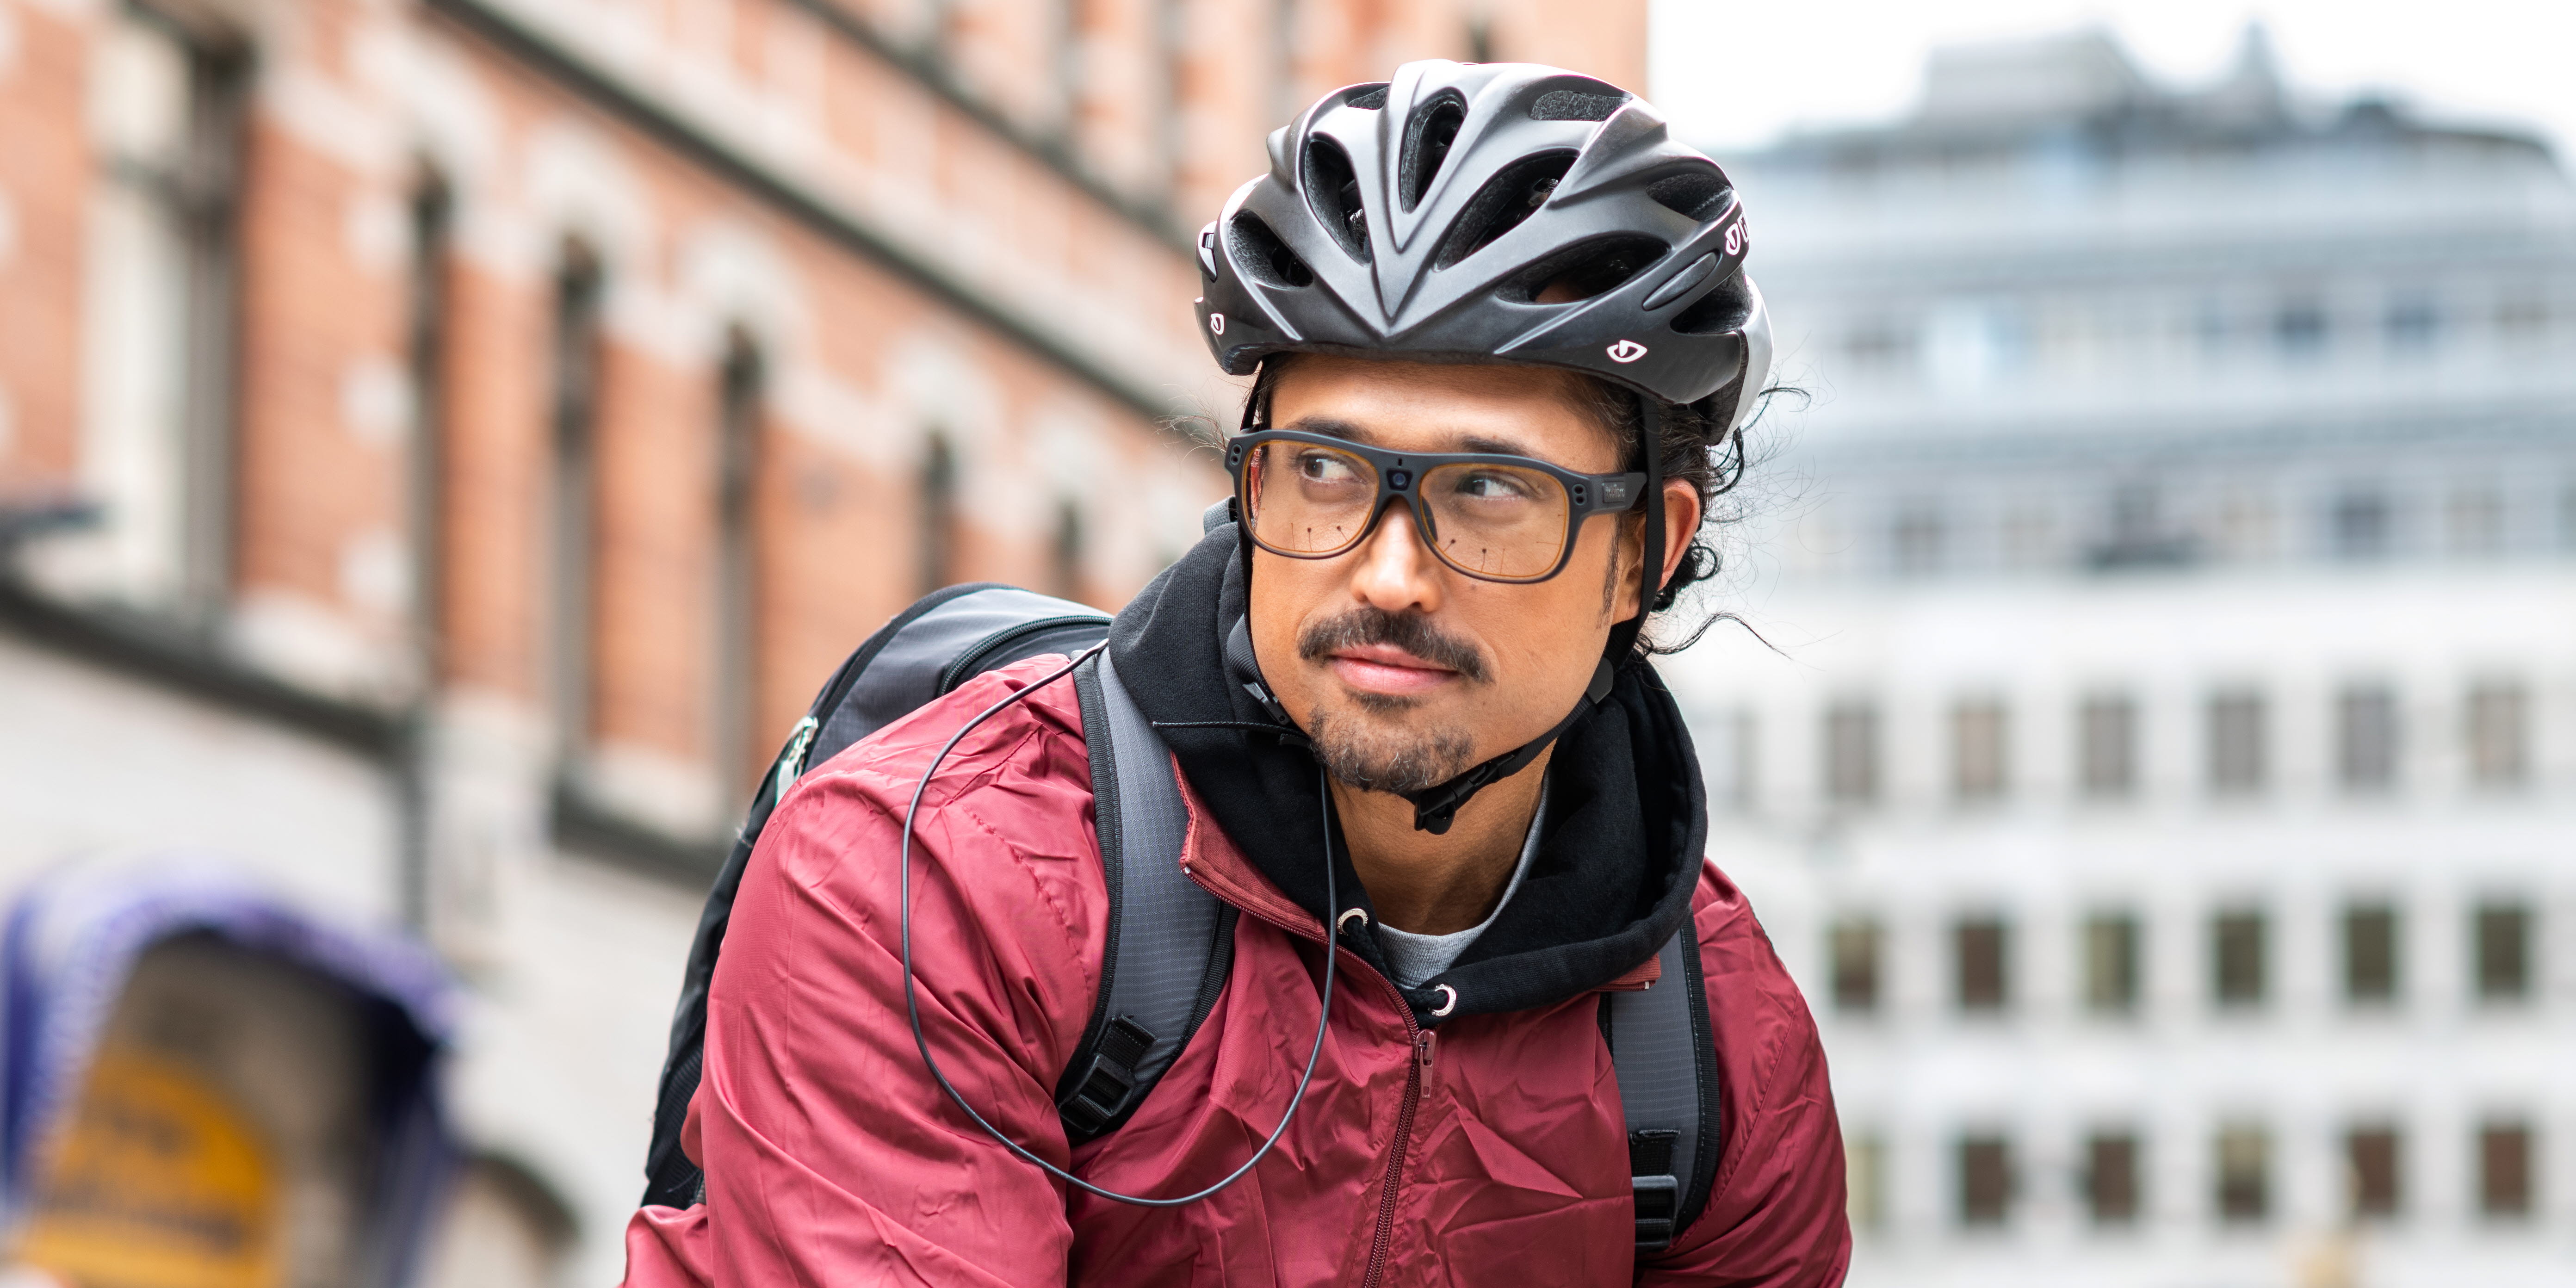 Person wearing Tobii Pro Glasses 3 riding a bike